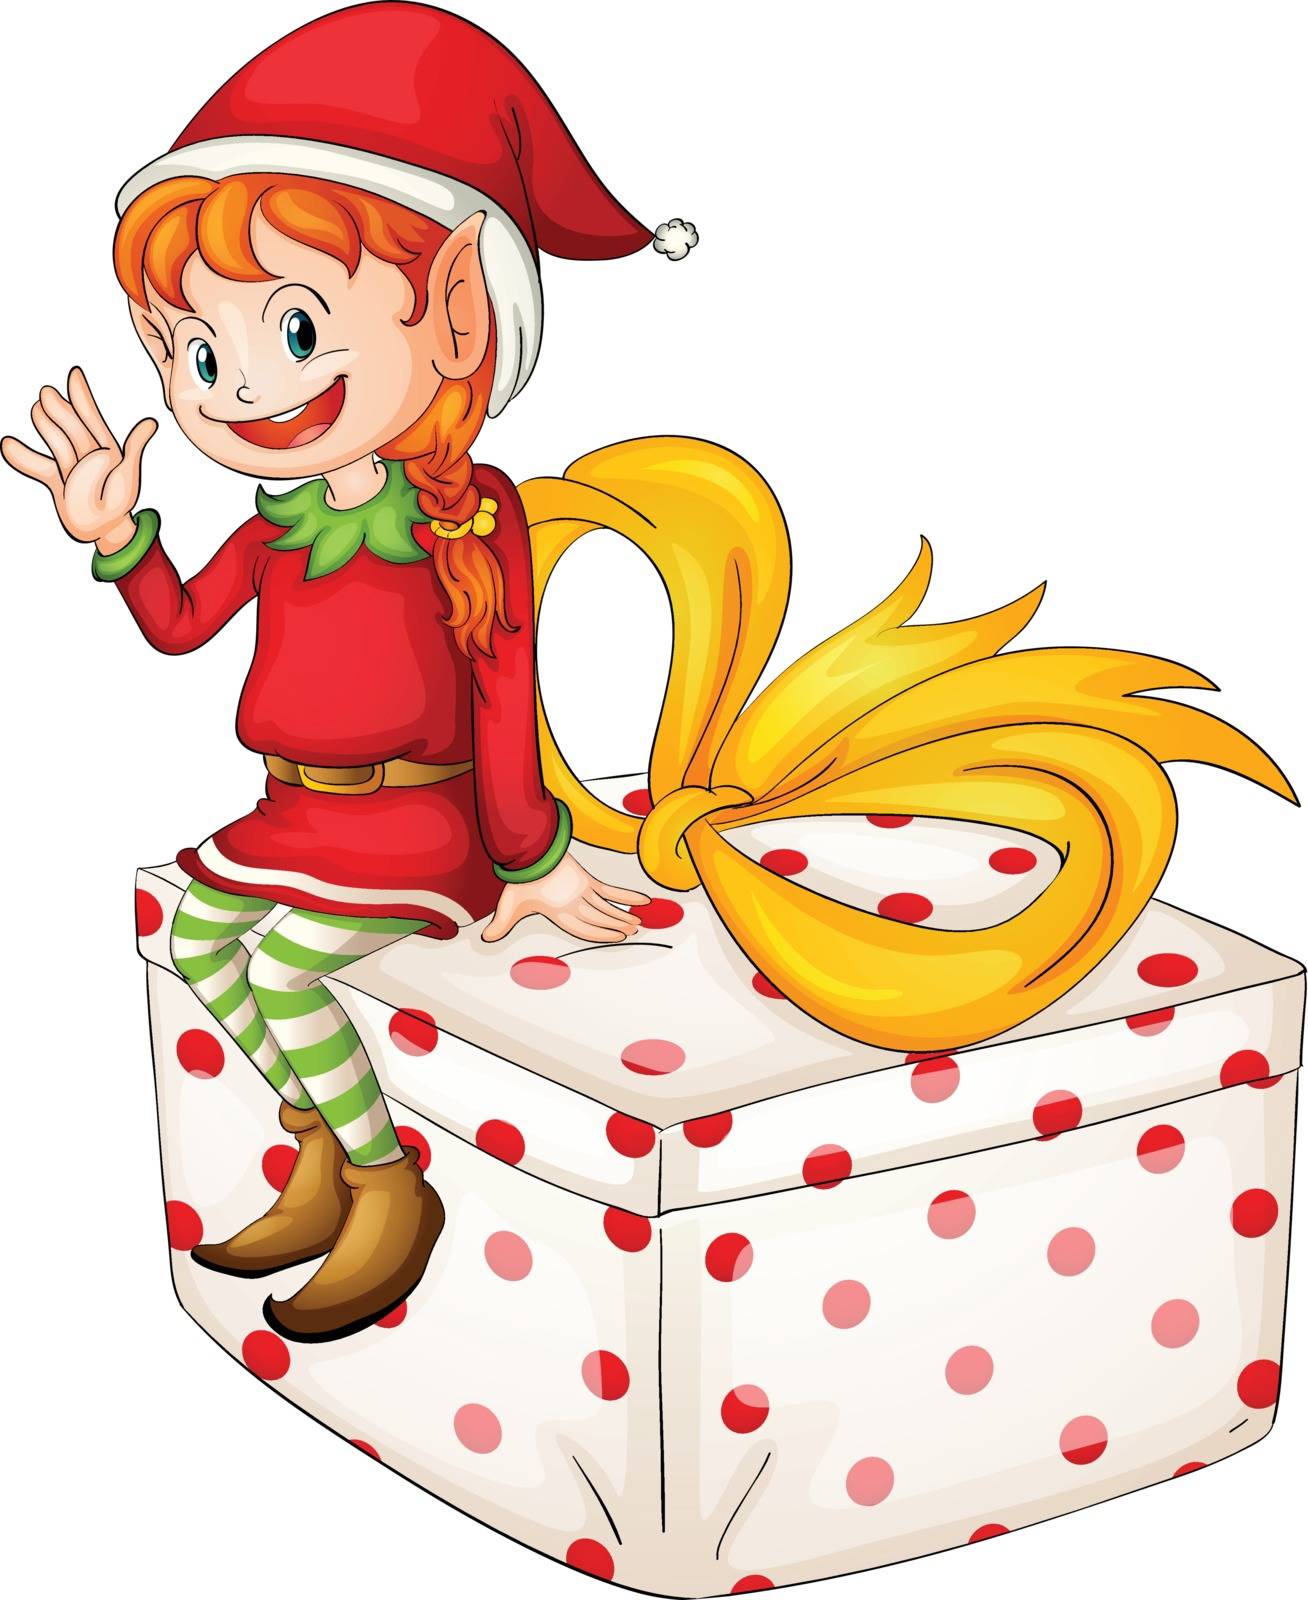 Illustration of a Christmas elf